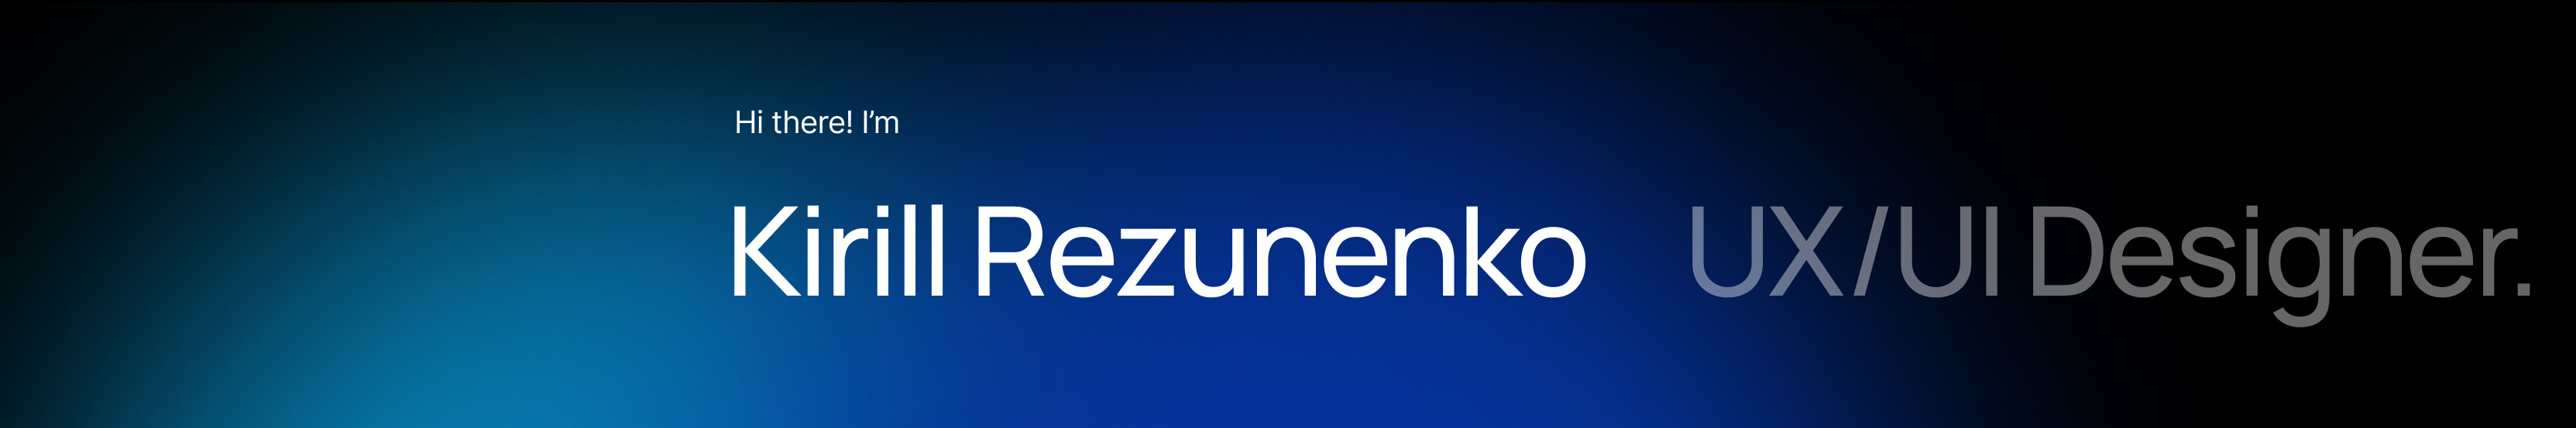 Kirill Rezunenko's profile banner